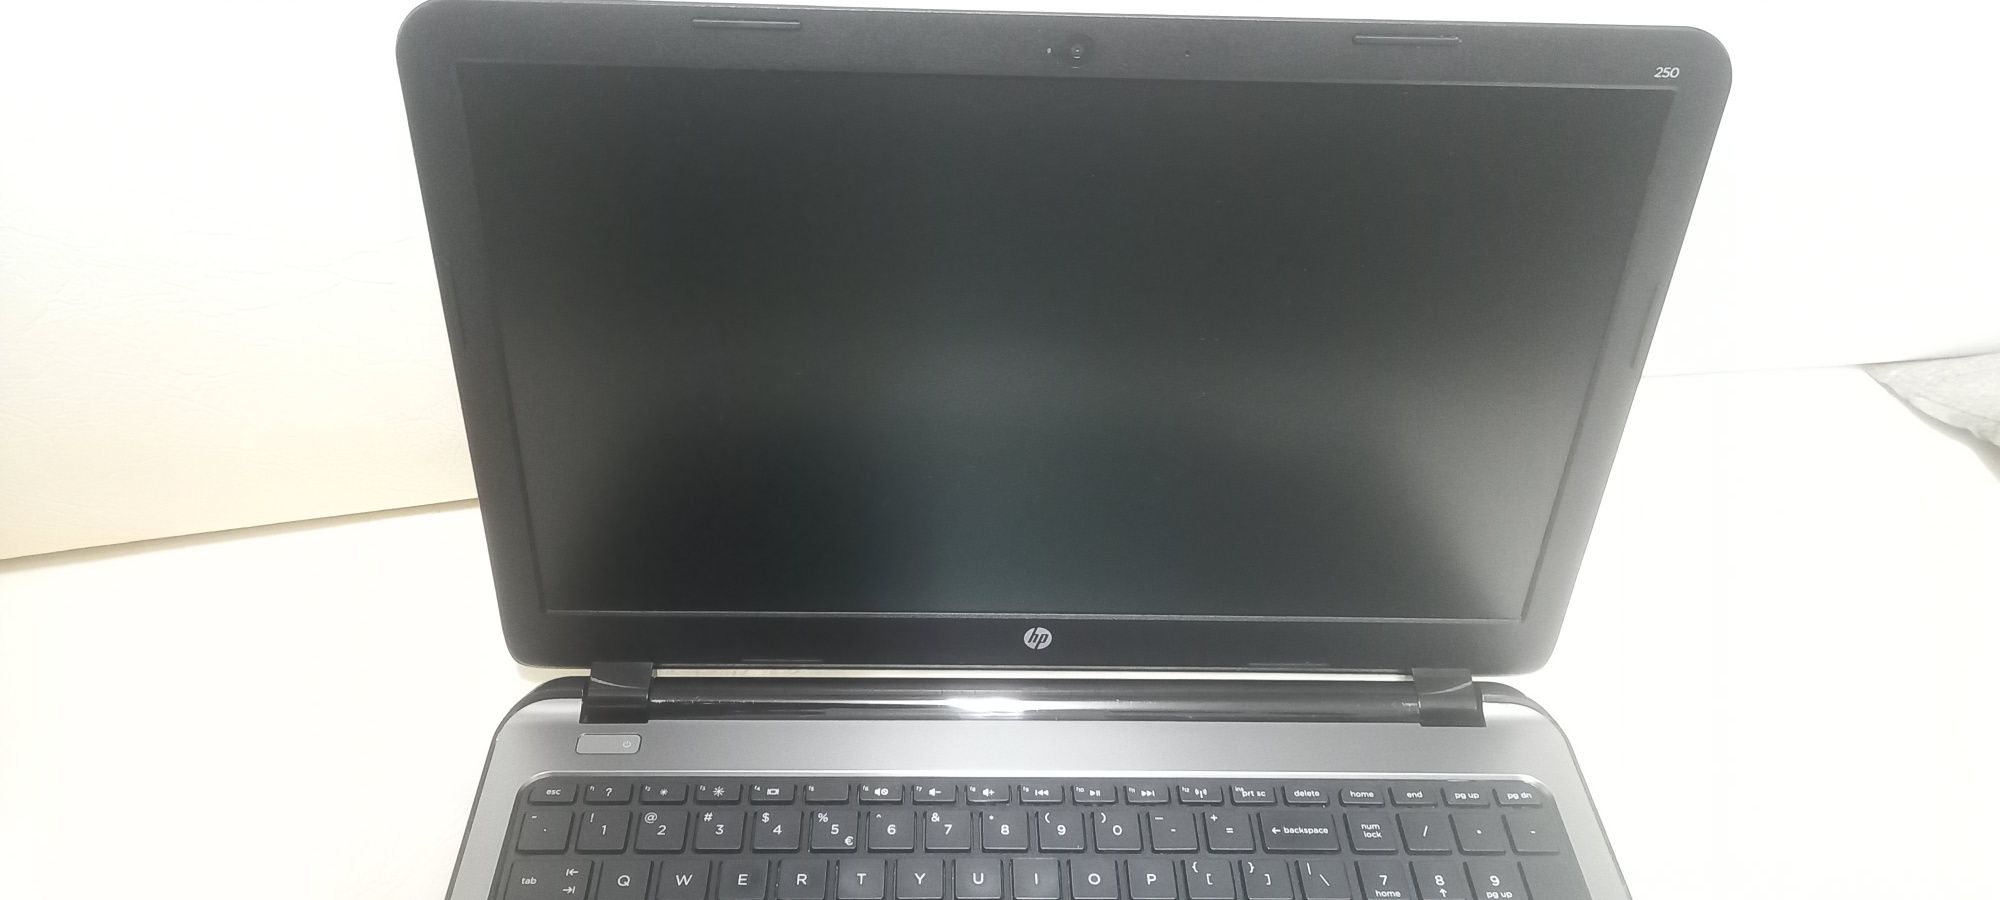 Лаптоп 15,6" HP  250 G3, Intel core i3-4005u,4 GB RAM, 500 GB